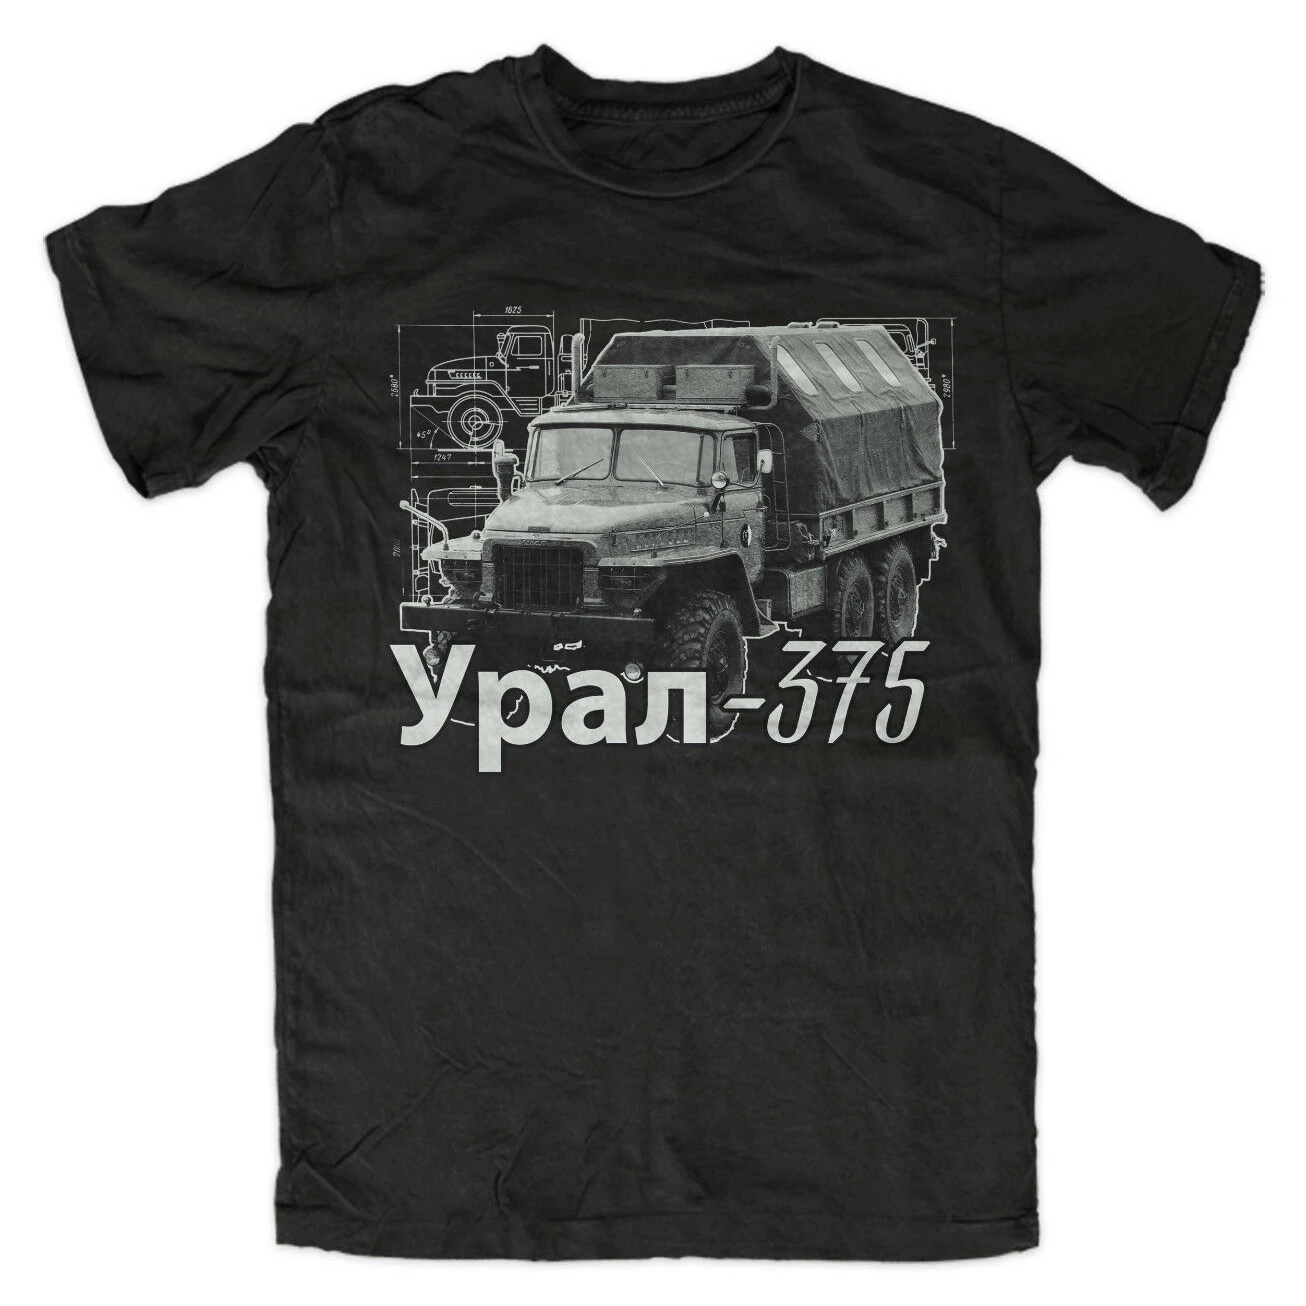 Soviet Russia URAL 375 Military Truck NVA DDR  Offroad Trial T-Shirt. Premium Cotton Short Sleeve O-Neck Mens T Shirt New S-3XL